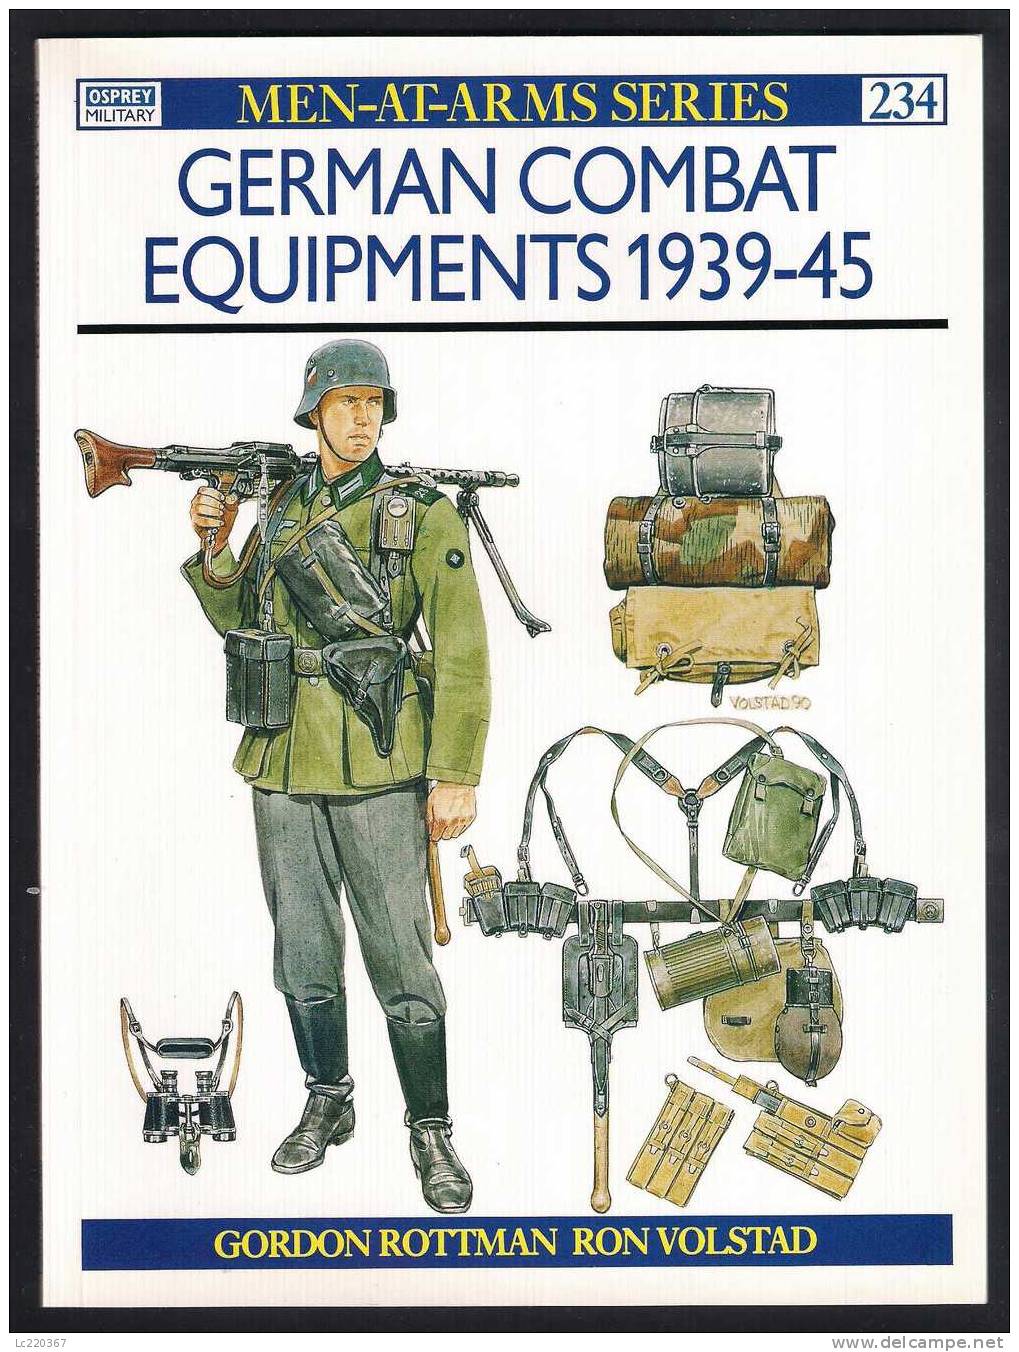 OSPREY MILITARY MEN-AT-ARMS SERIES NR.234 GERMAN COMBAT EQUIPMENTS 1939-45 GORDON ROTTMAN ISBN 0-85045-952-4 - Englisch